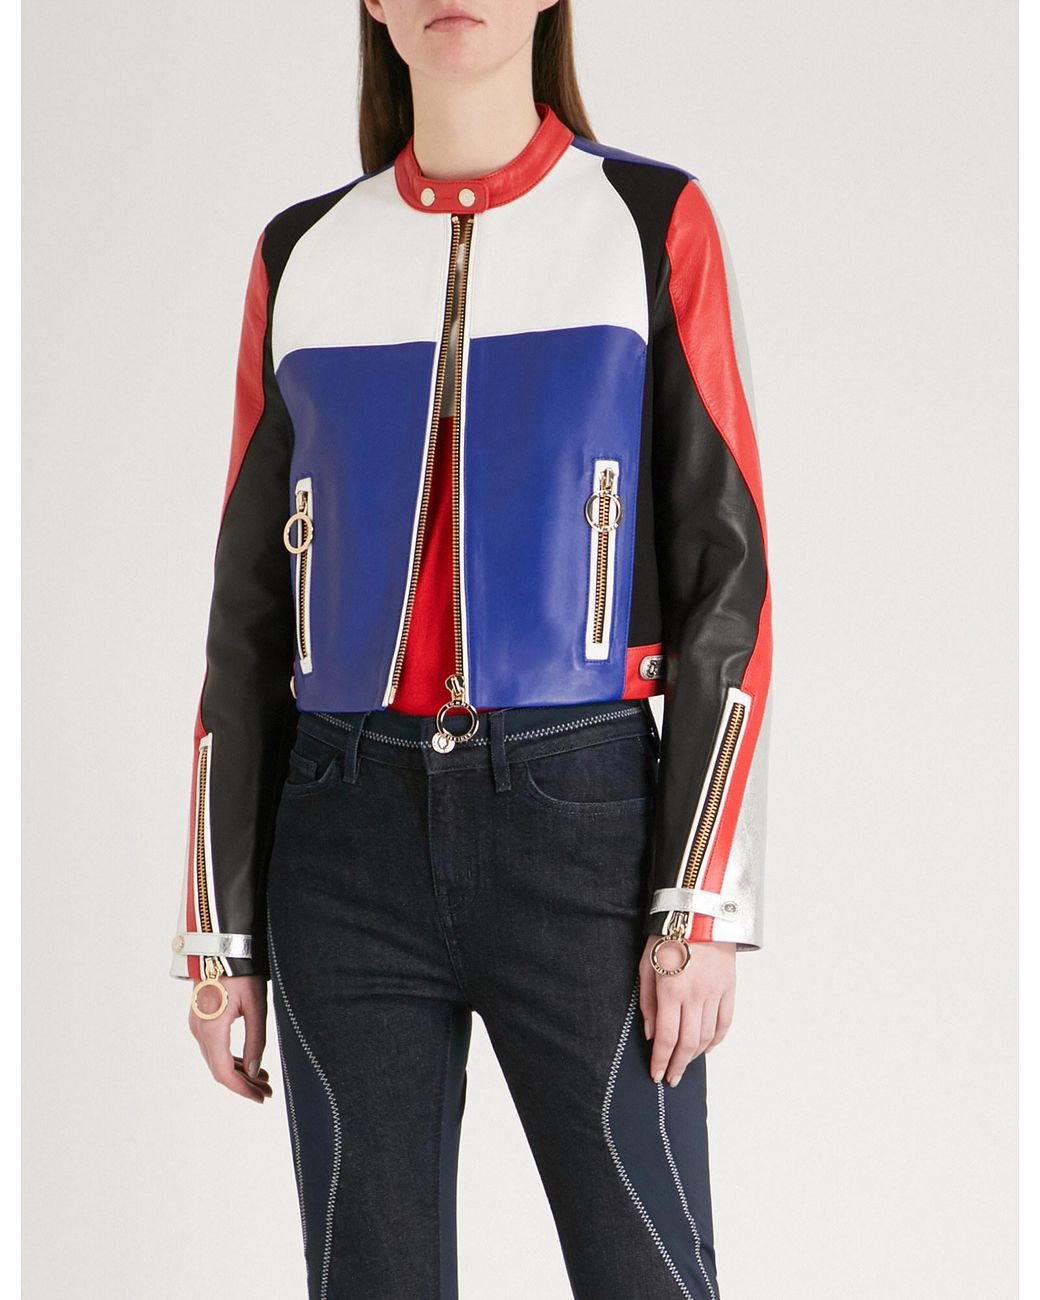 Tommy Hilfiger X Gigi Hadid Colourblocked Leather Jacket | Lyst